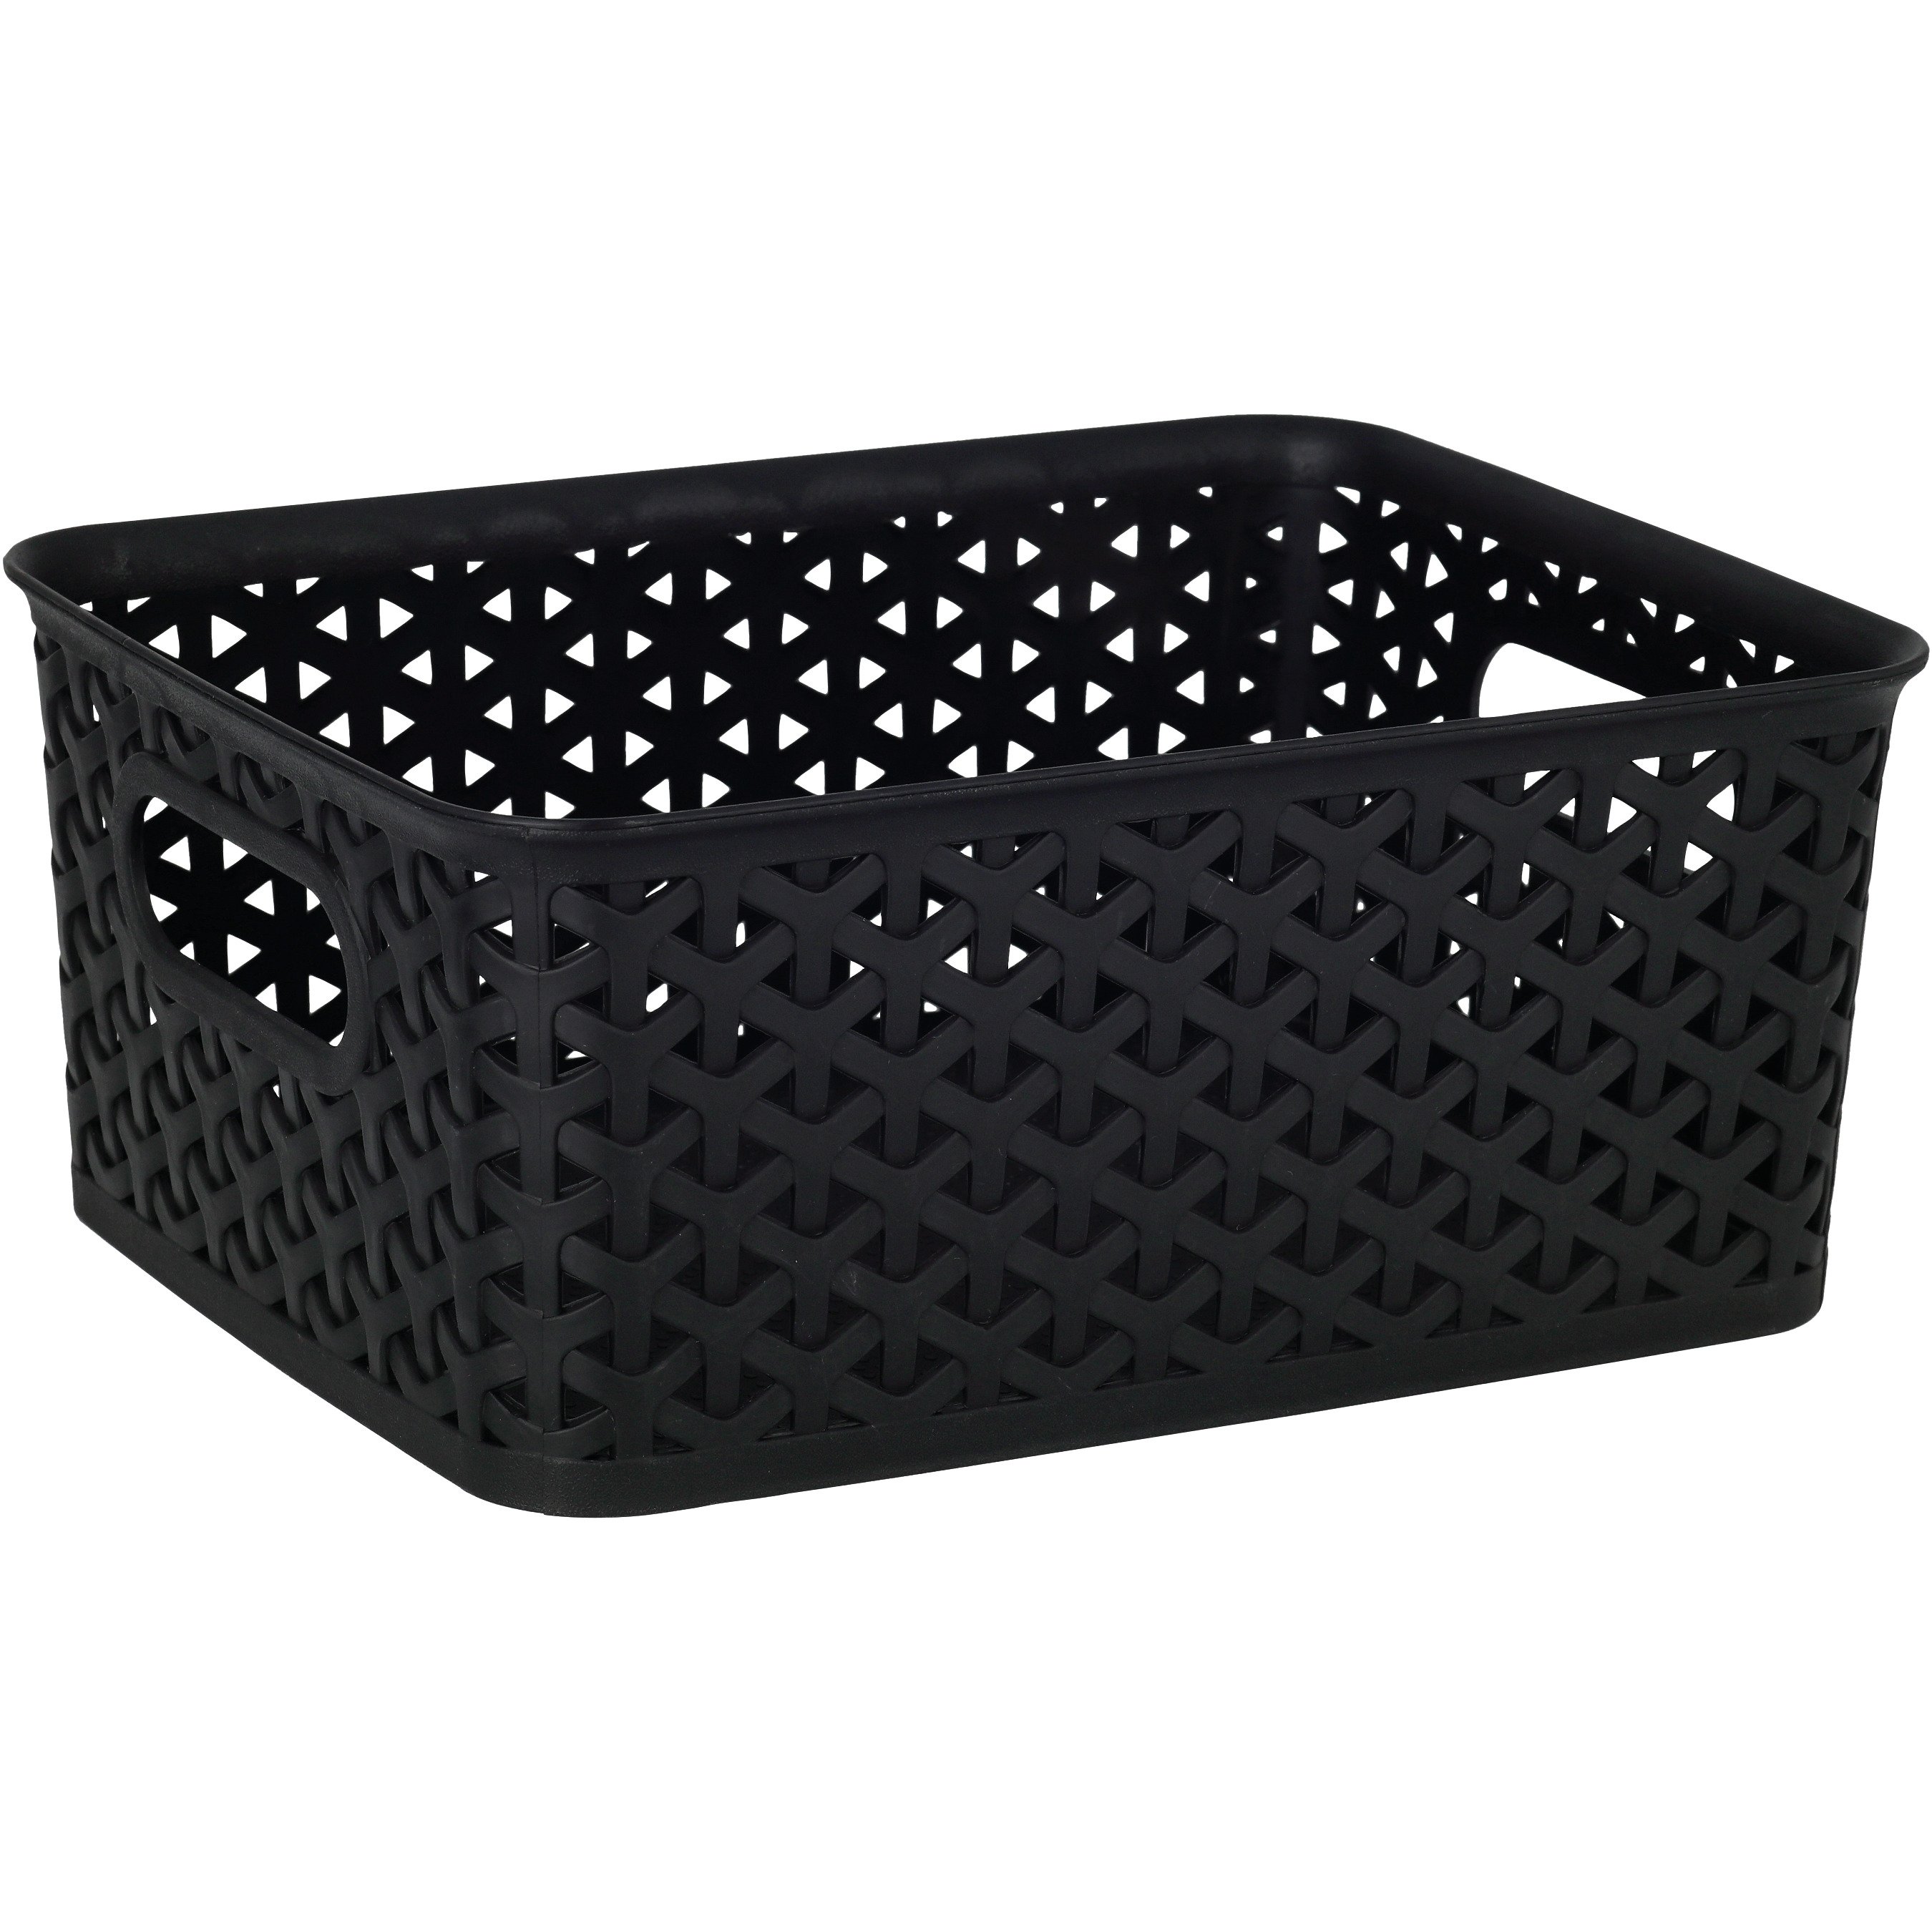 Plastic Bin Storage Bins & Baskets at